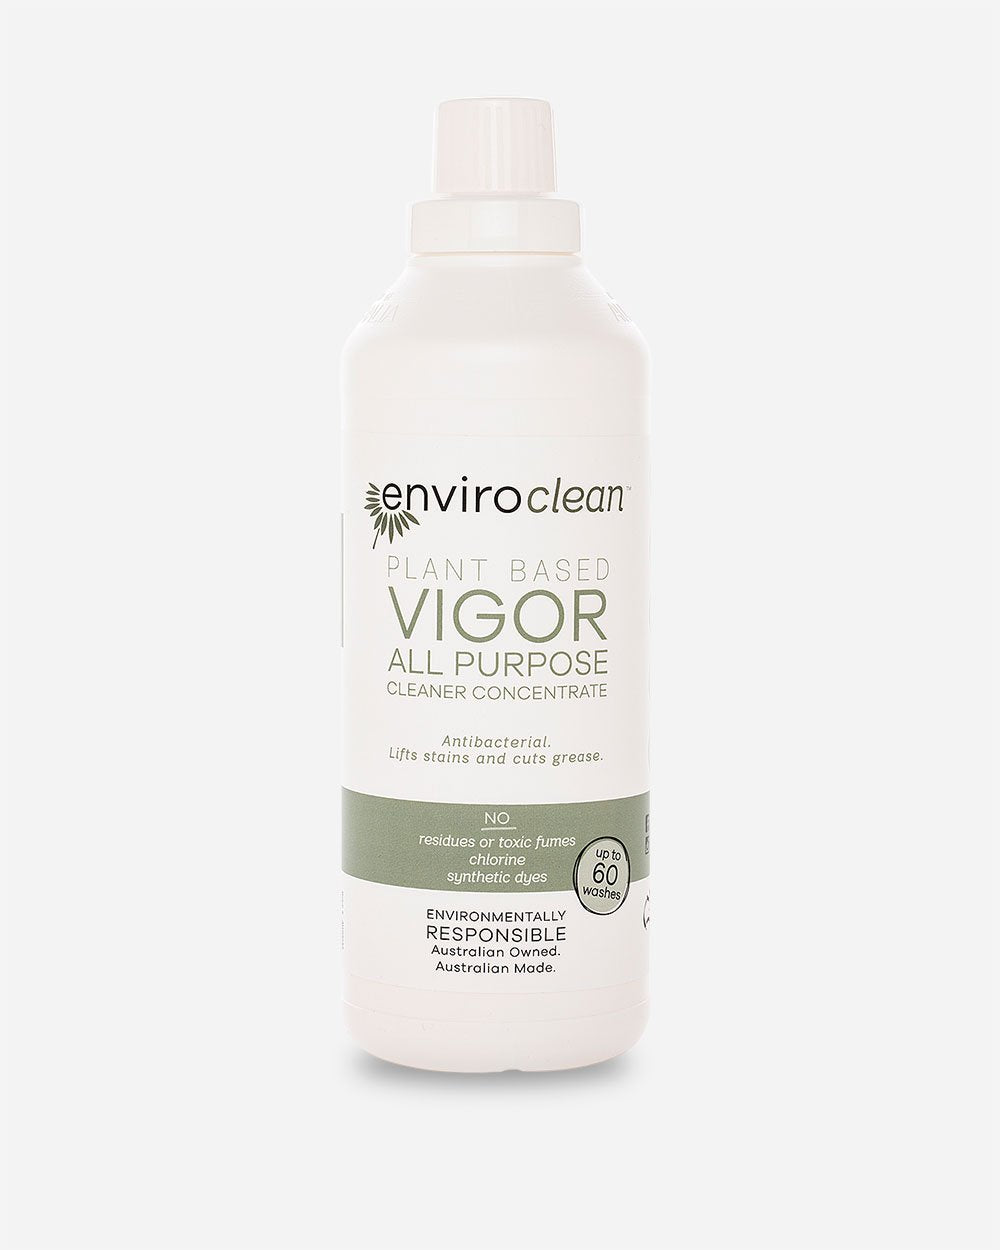 Vigor All-Purpose Cleaner from Enviroclean